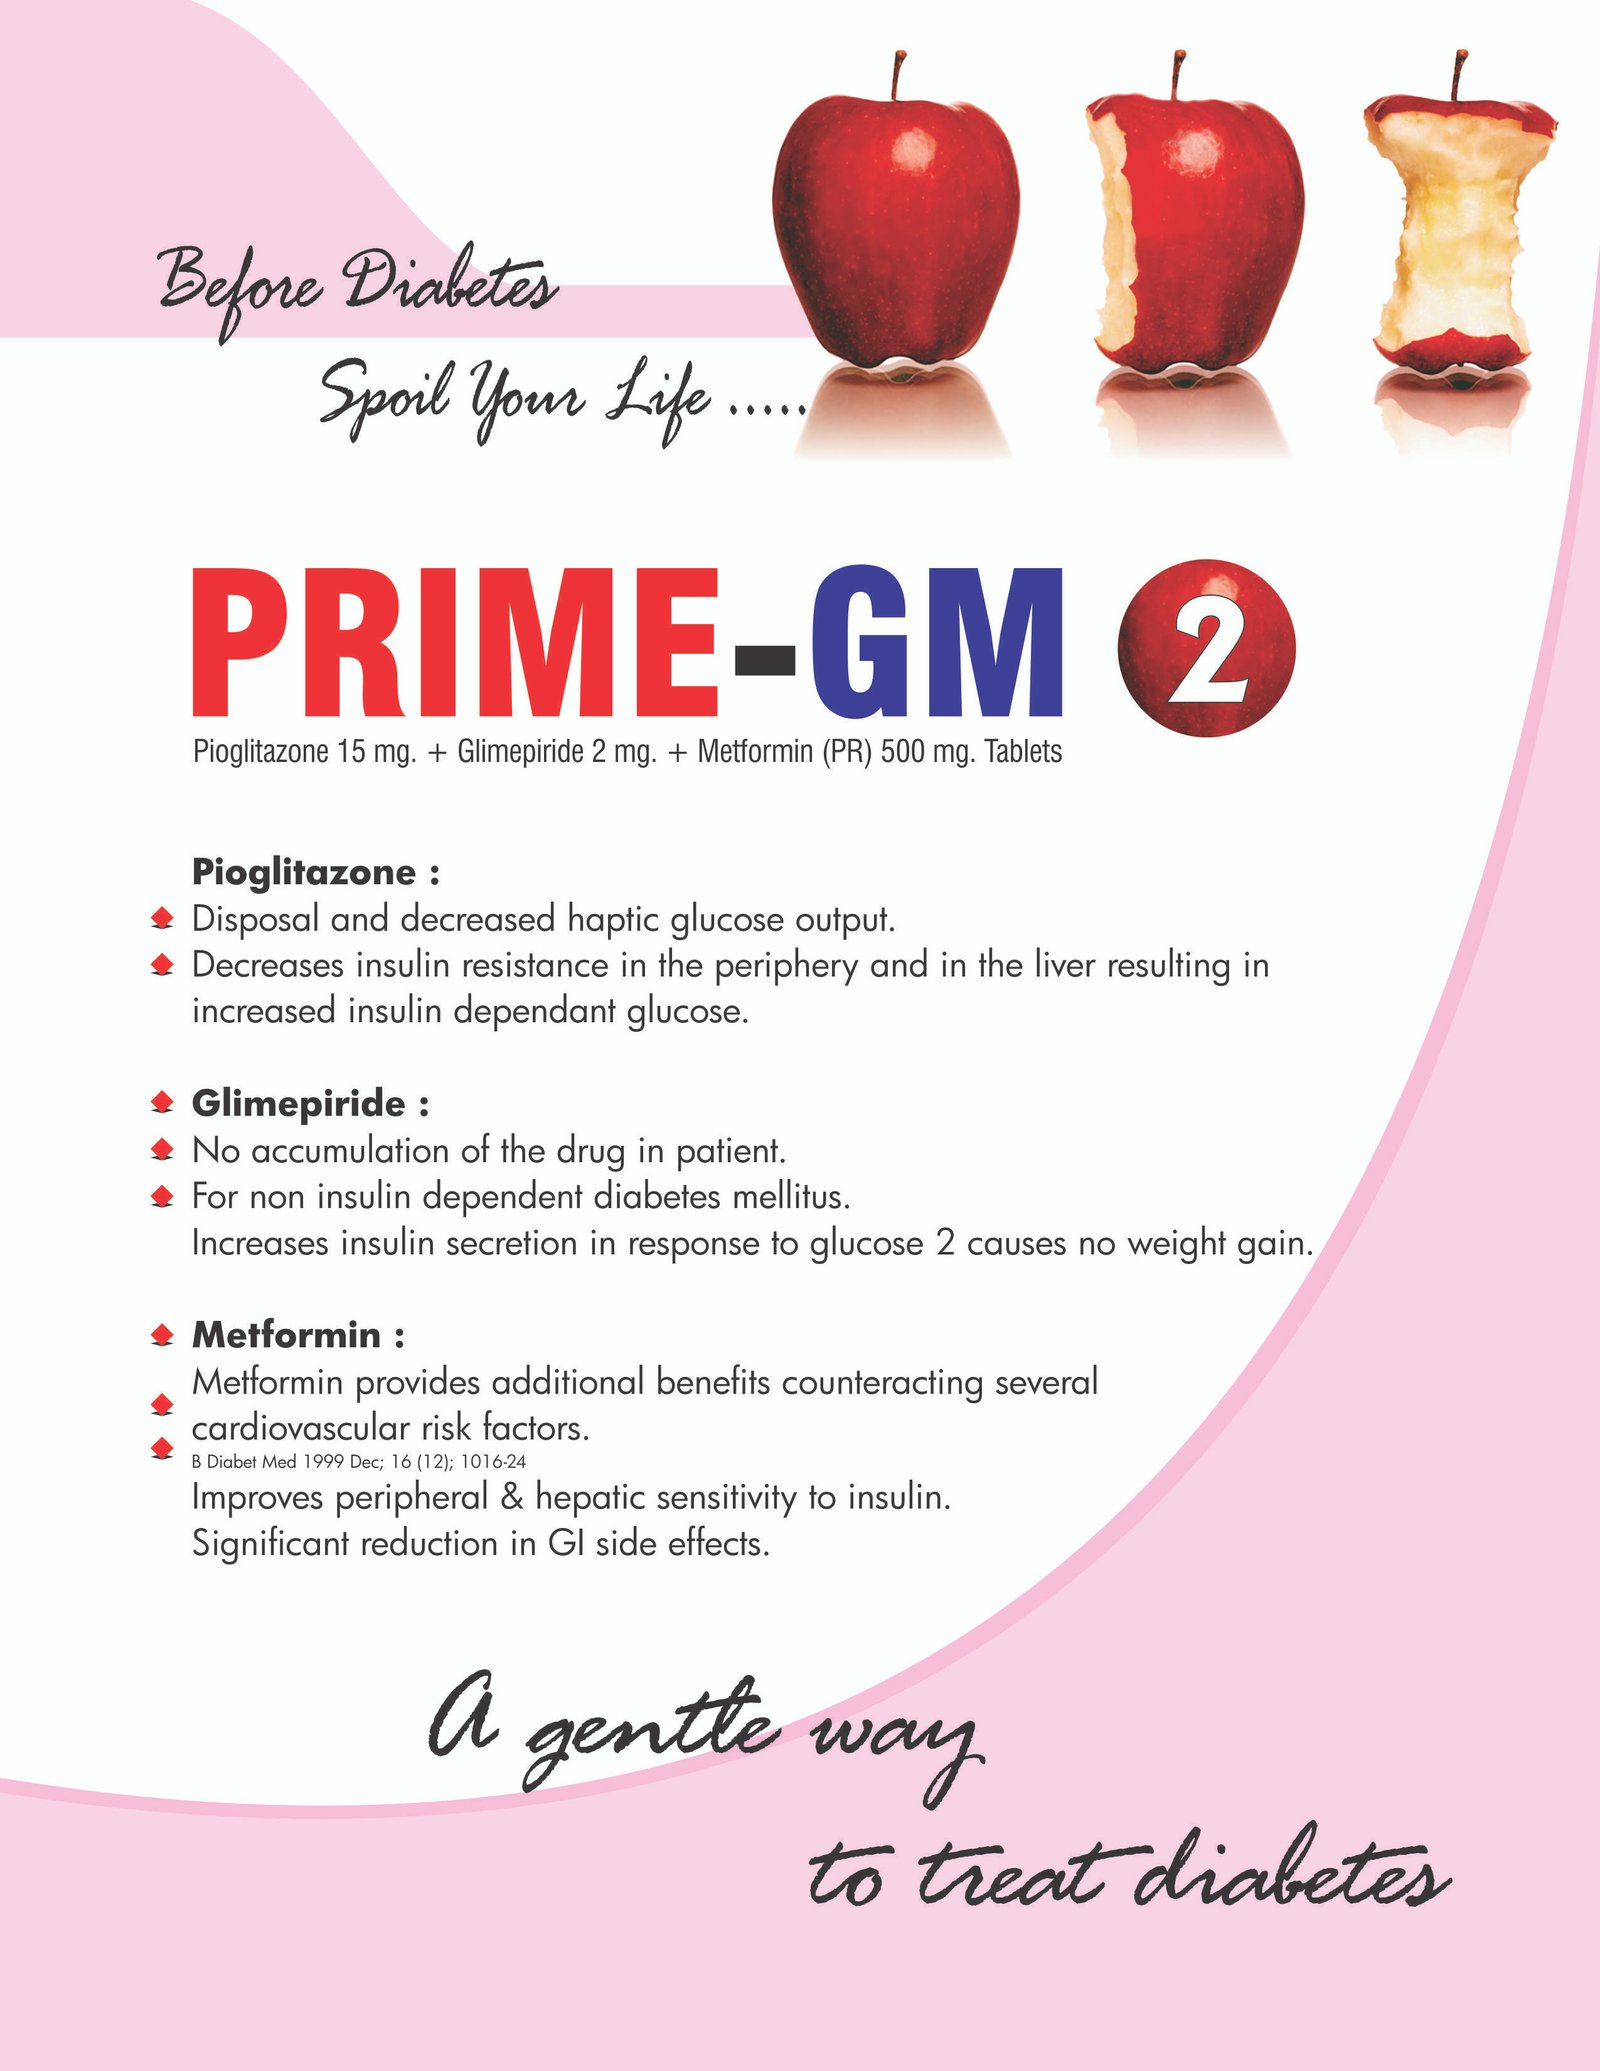 prime-gm2 dakshpharma, daksh pharmaceuticals panchkula, pcd franchise, pharma franchise